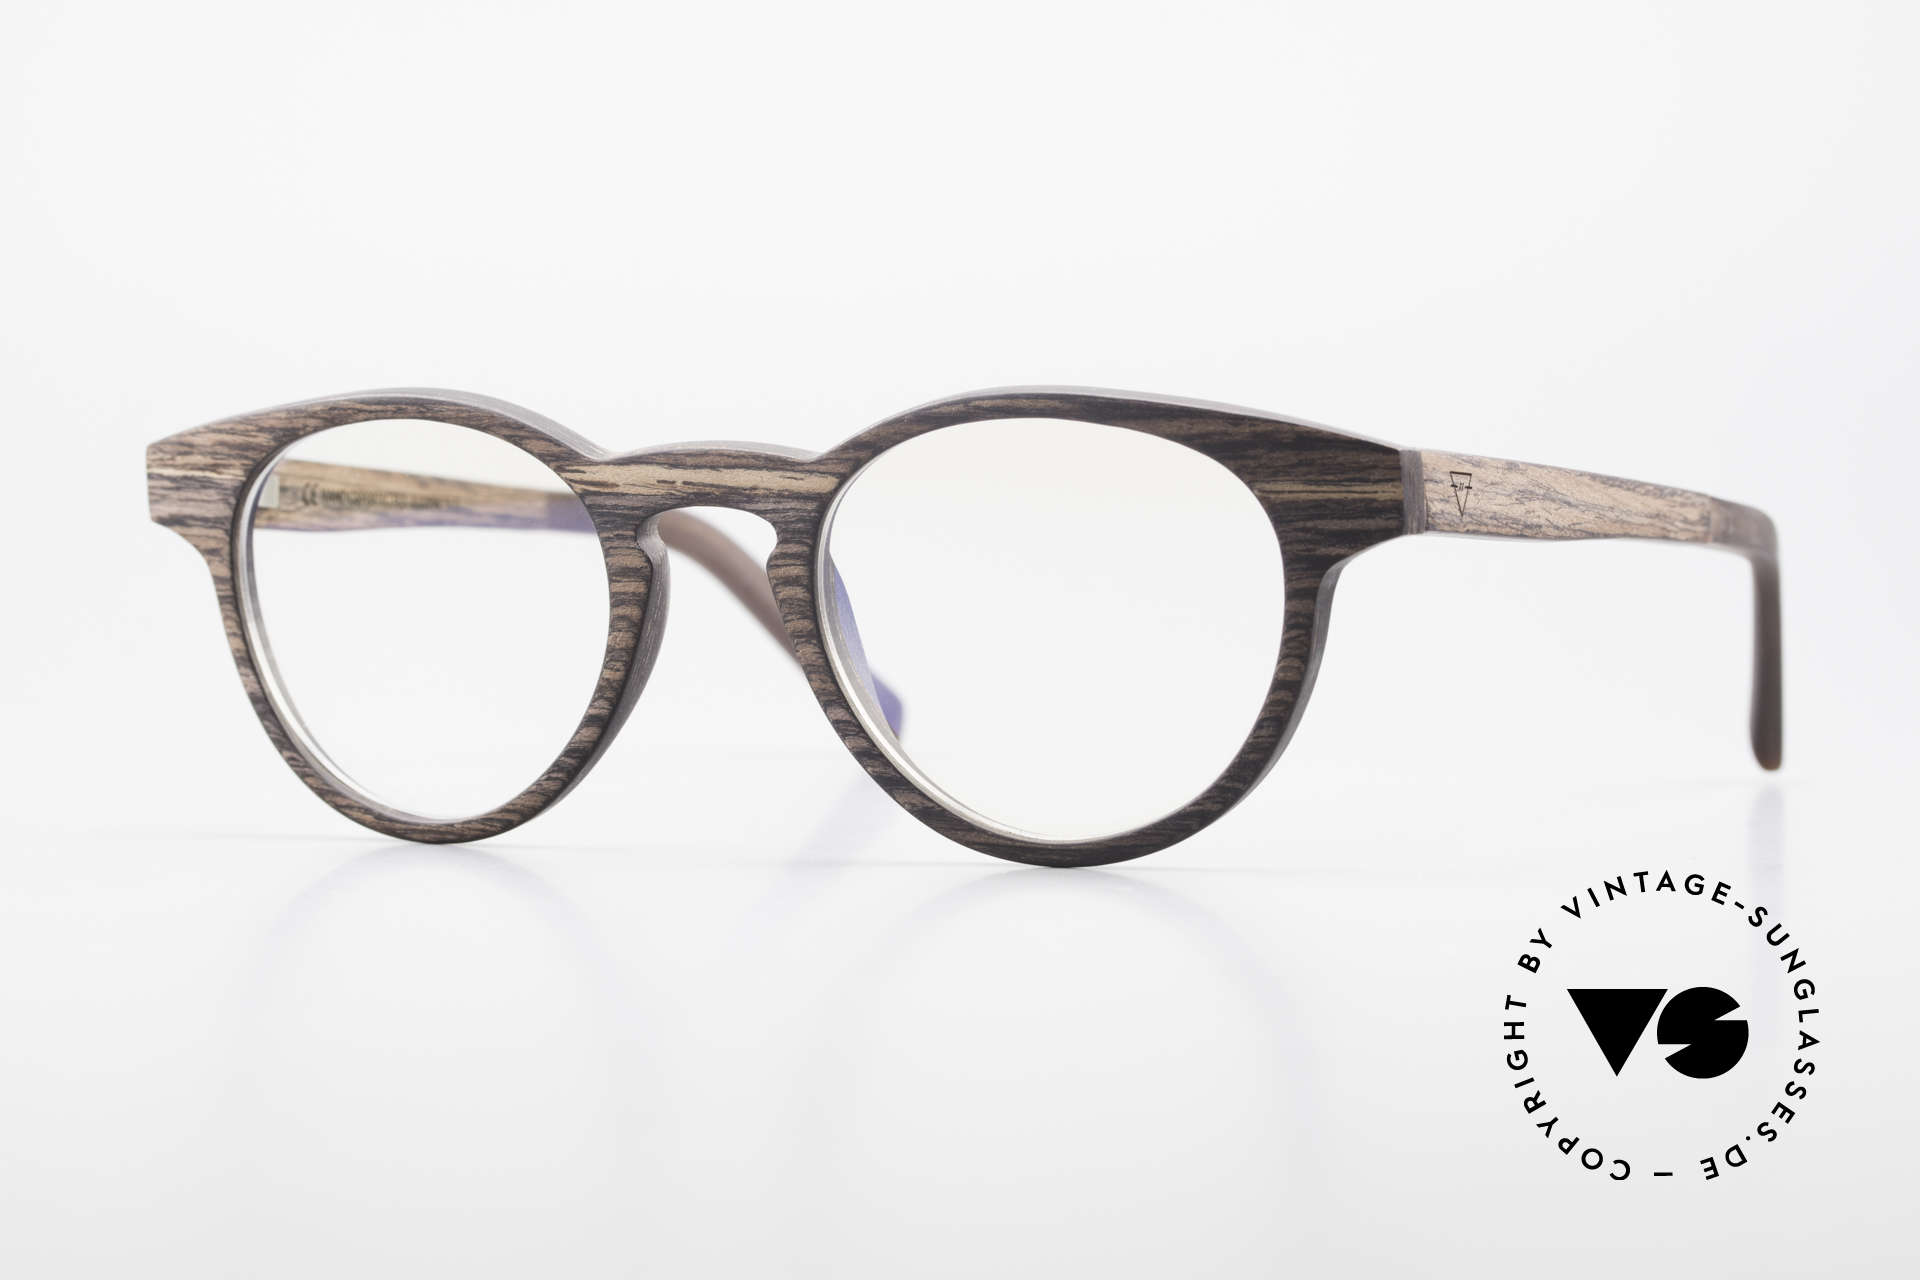 Kerbholz Friedrich Panto Wood Glasses Kingwood, WOOD panto glasses by Kerbholz, made in Germany, Made for Men and Women